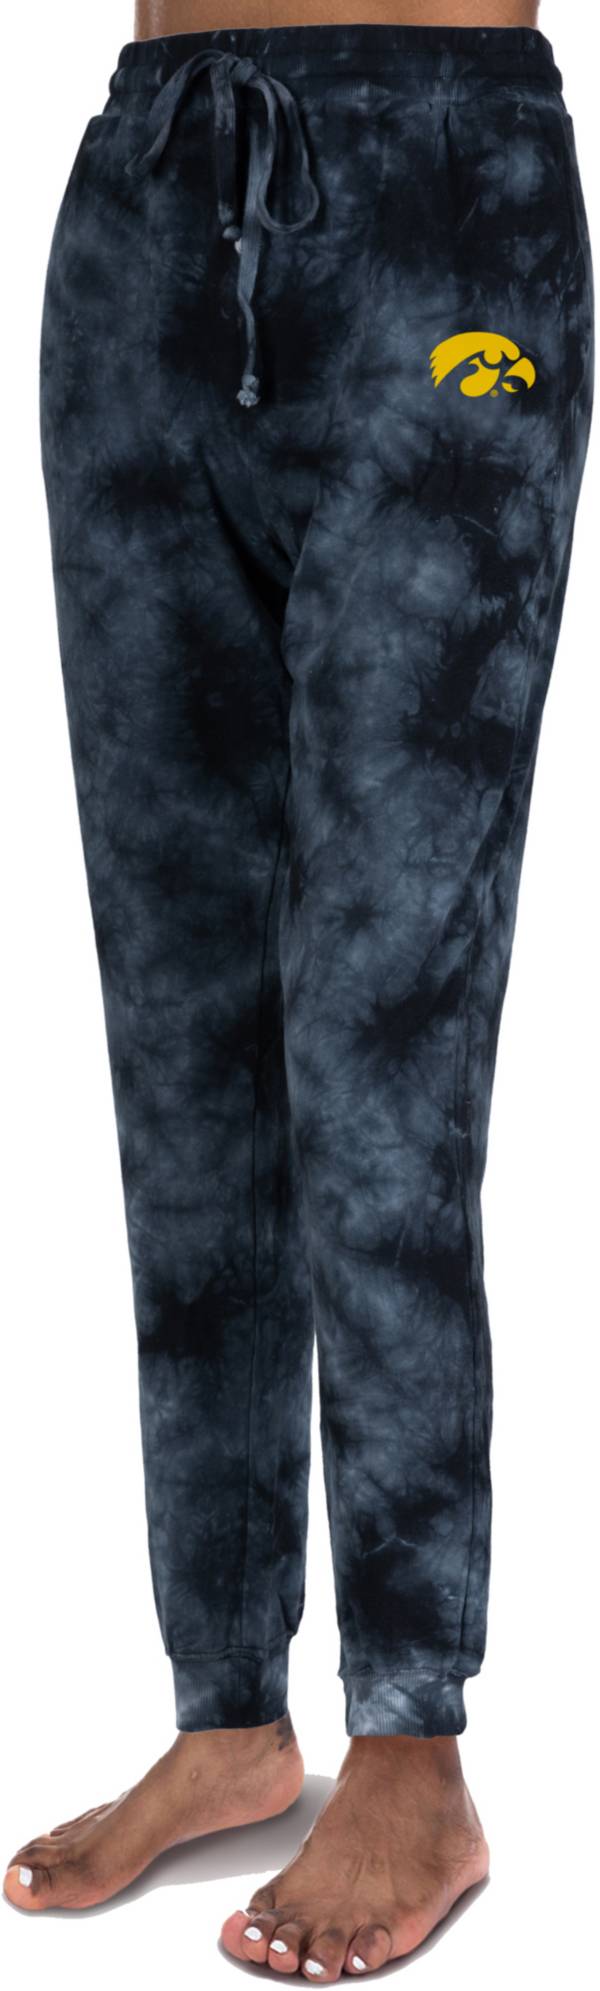 ZooZatZ Women's Iowa Hawkeyes Black Tie-Dye High-Waisted Joggers product image